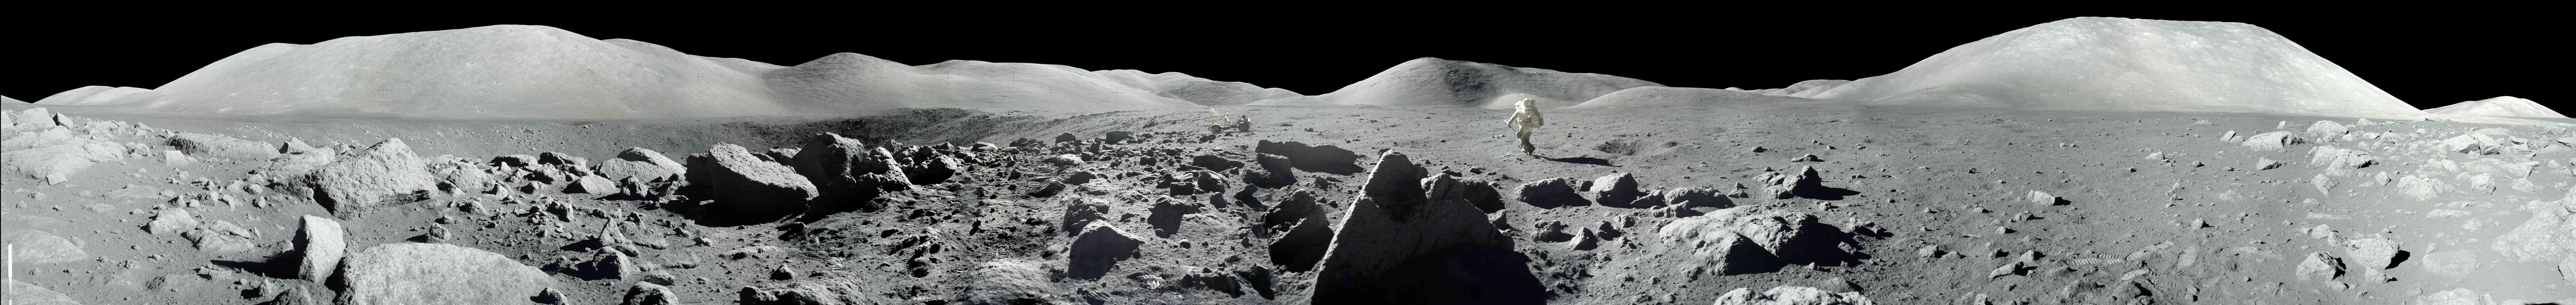 Apollo 17 panorama